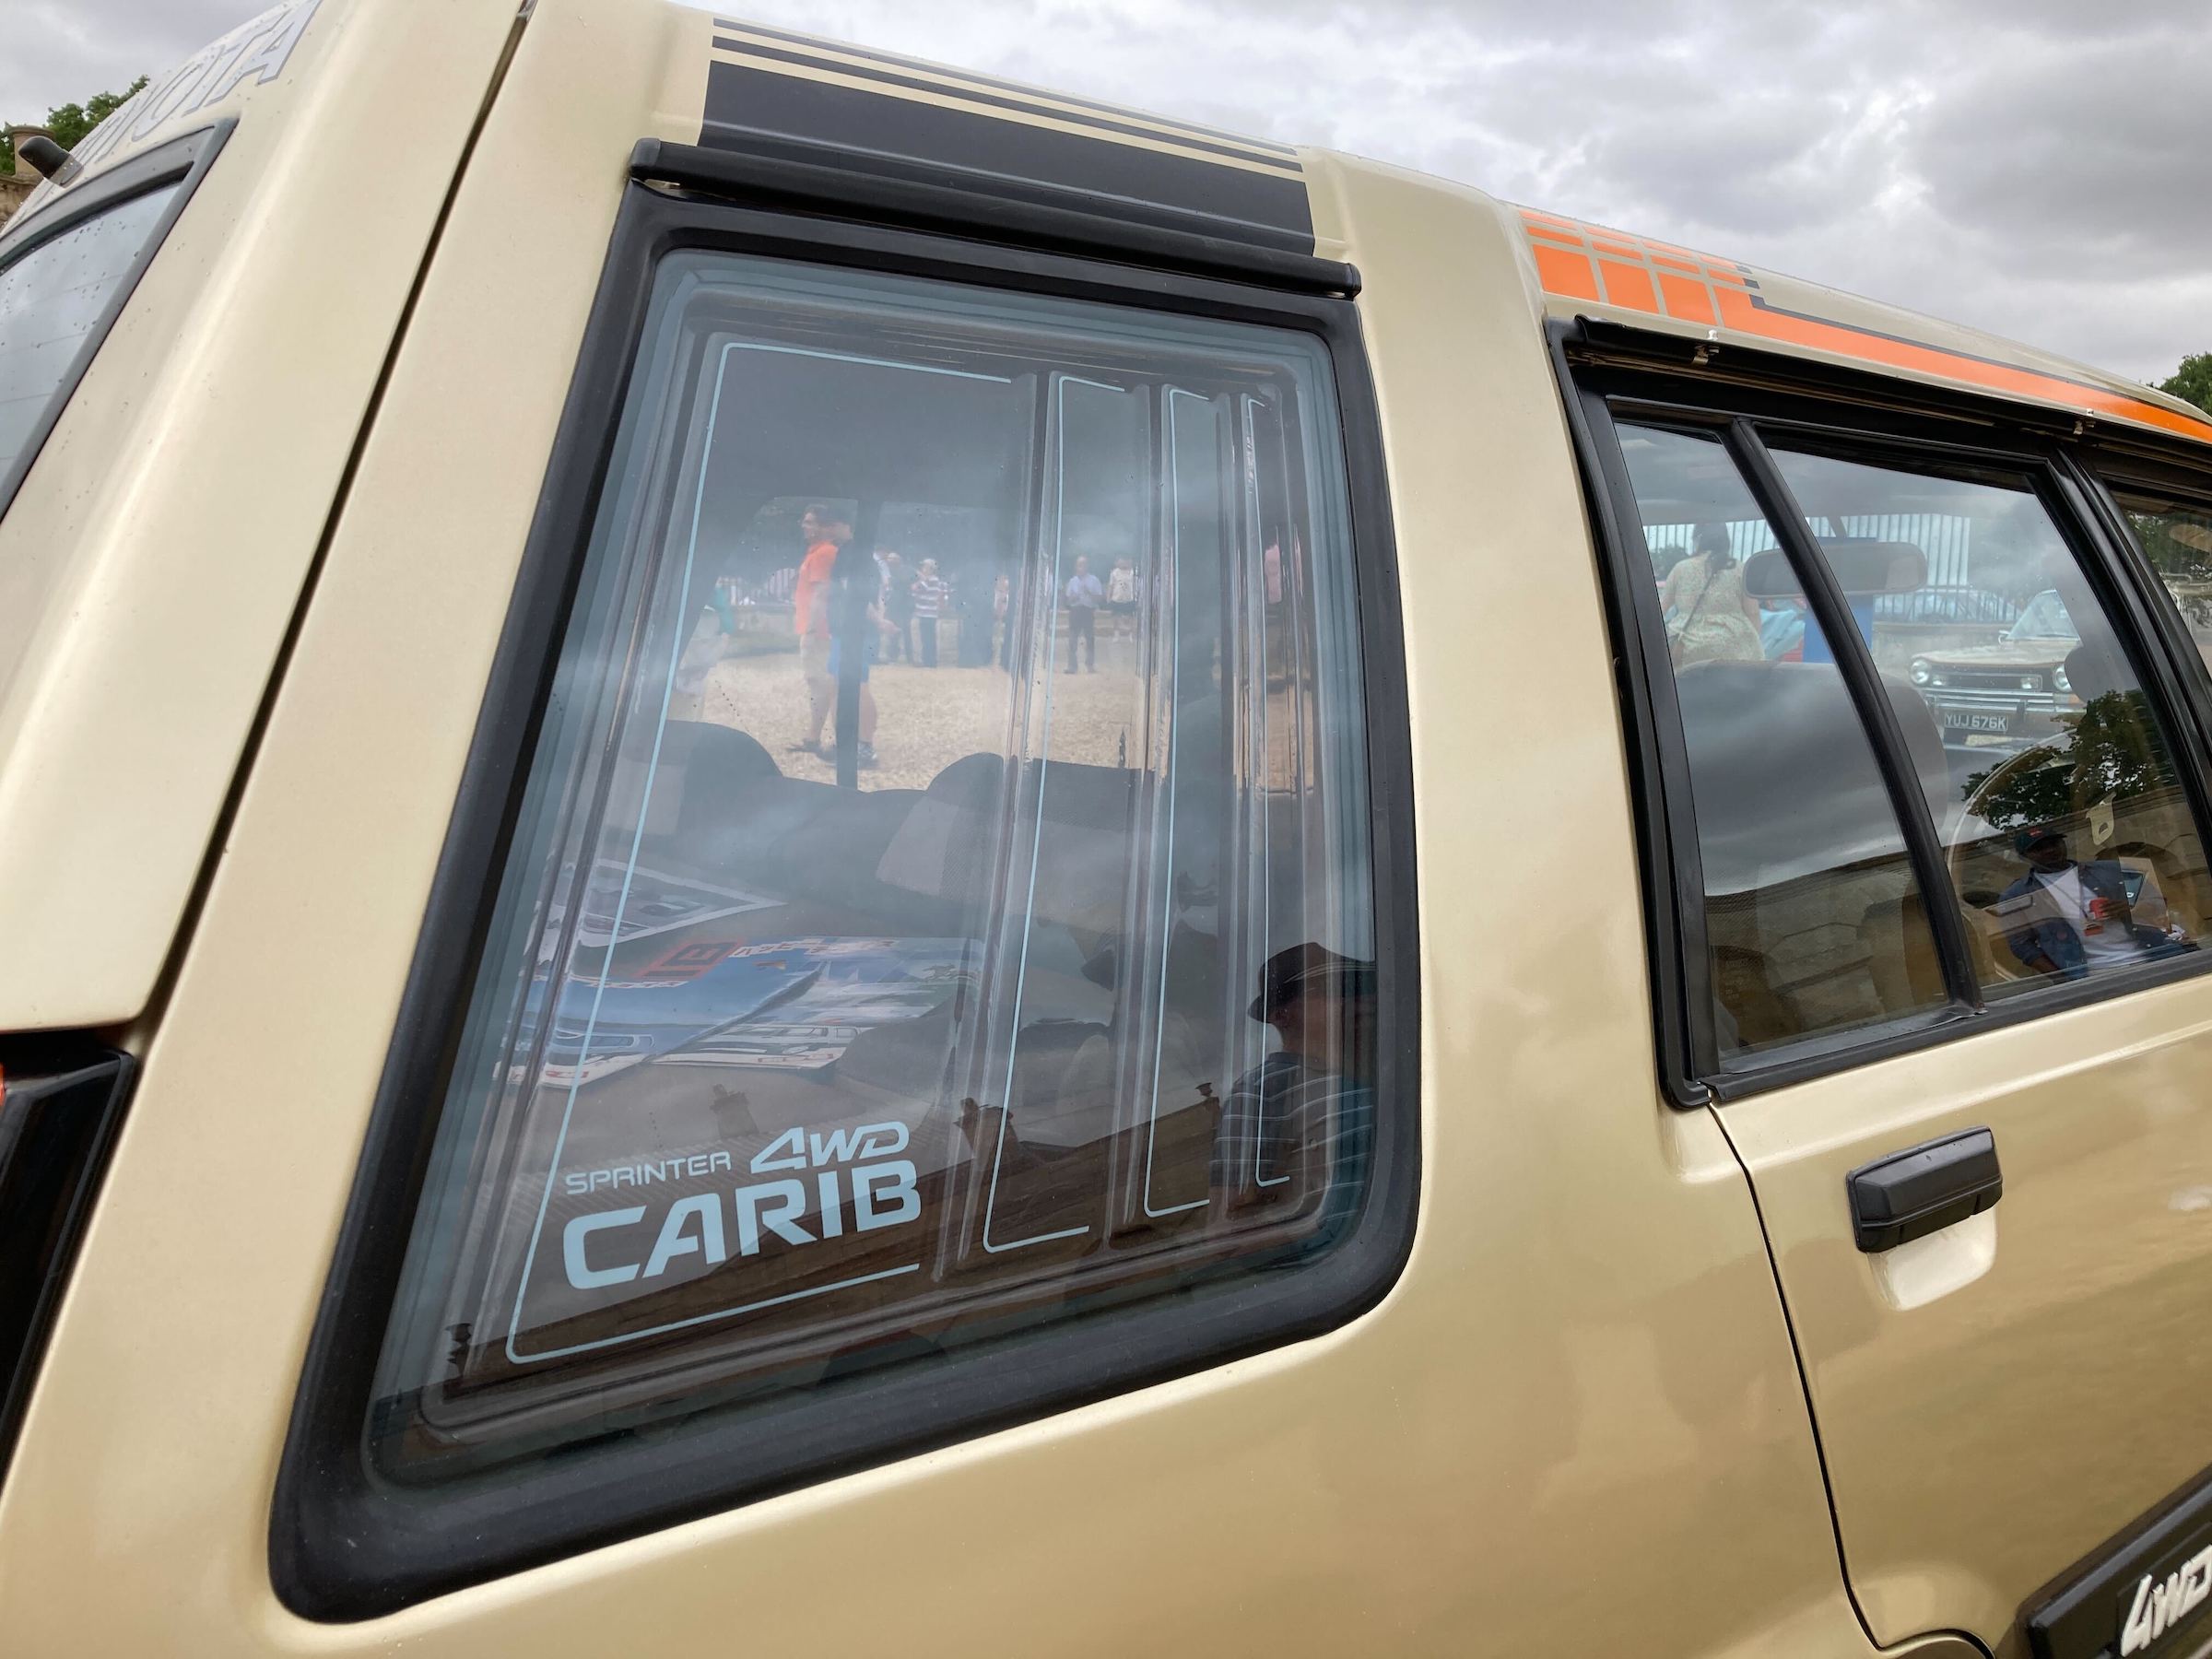 Toyota Sprinter Carib window